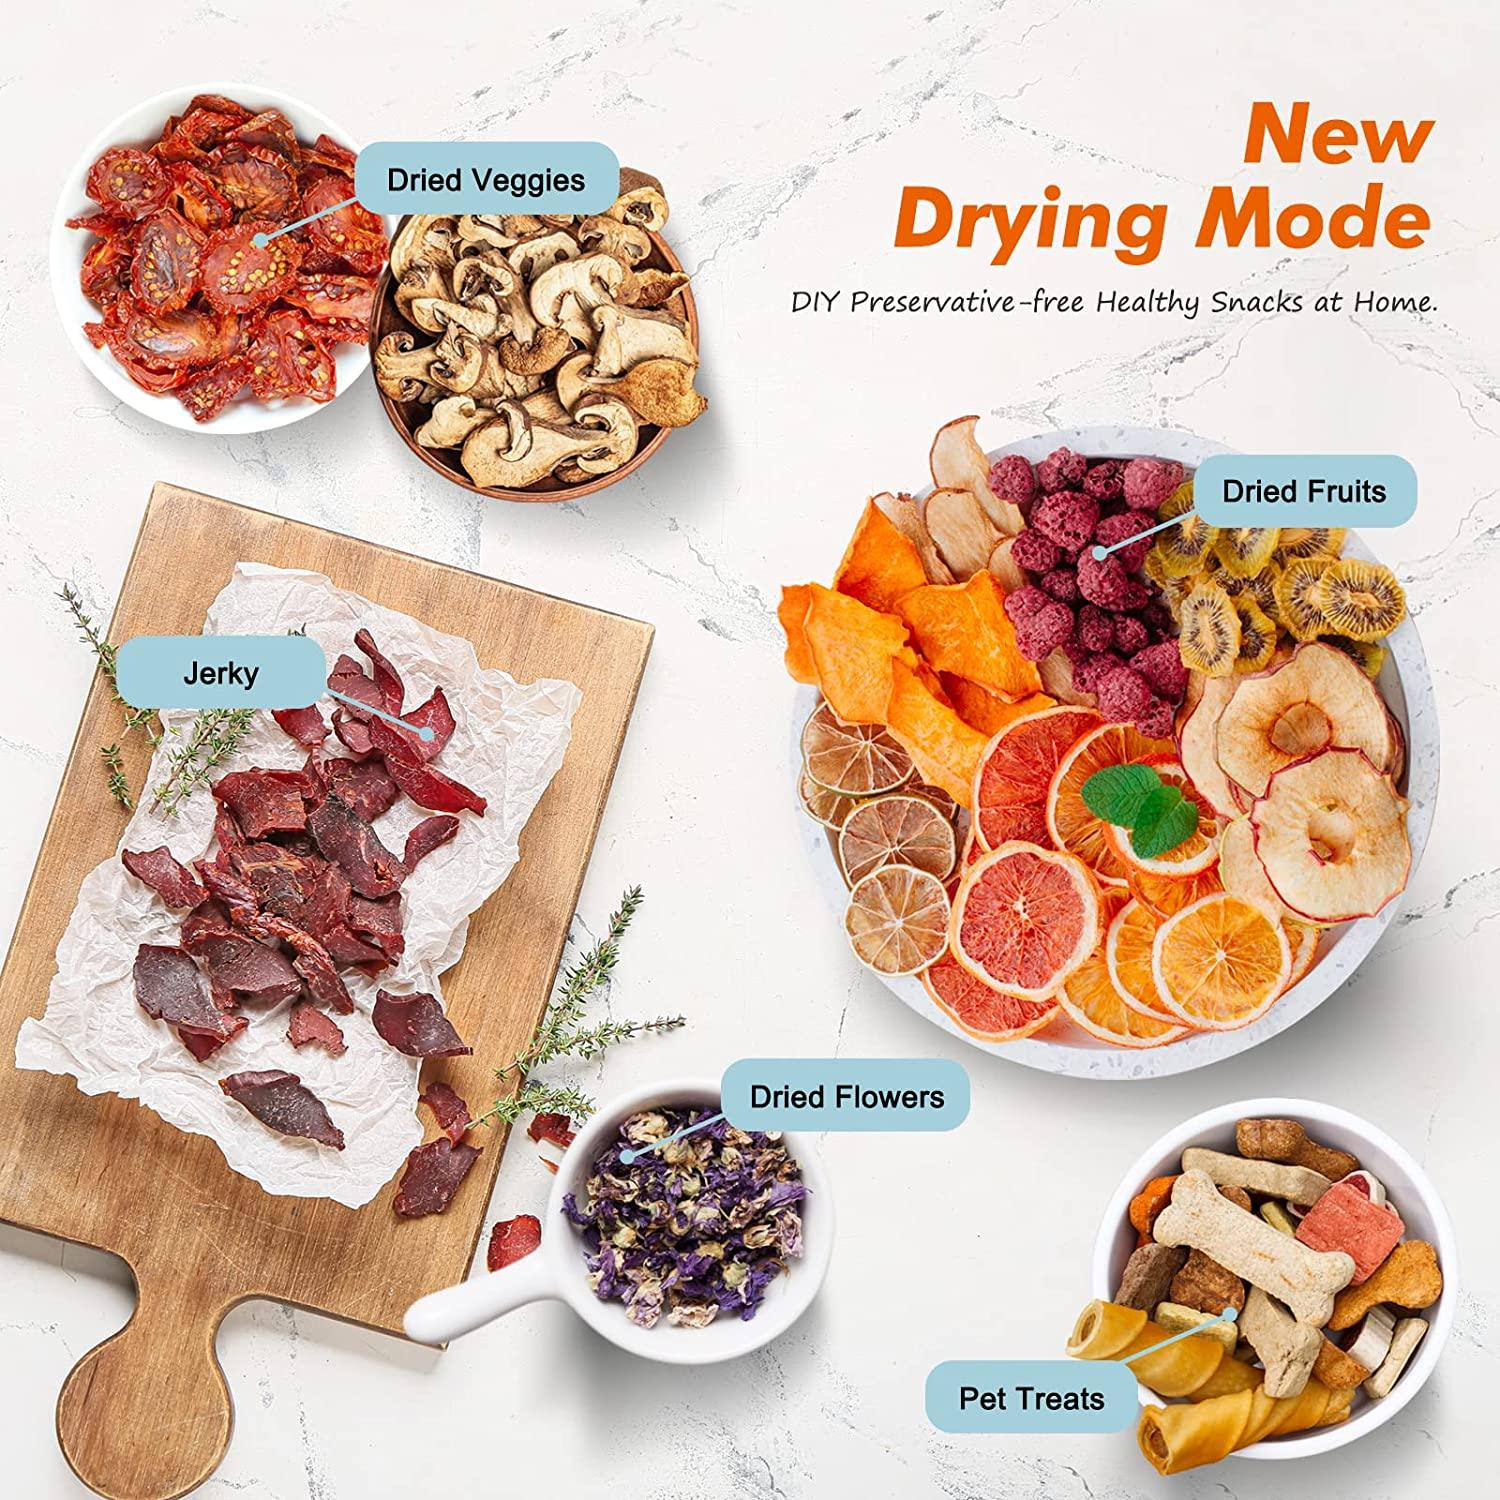 New 10 Layers Food Dehydrator Fruit Drying Machine Vegetable Dryer Fruit  Dryer B